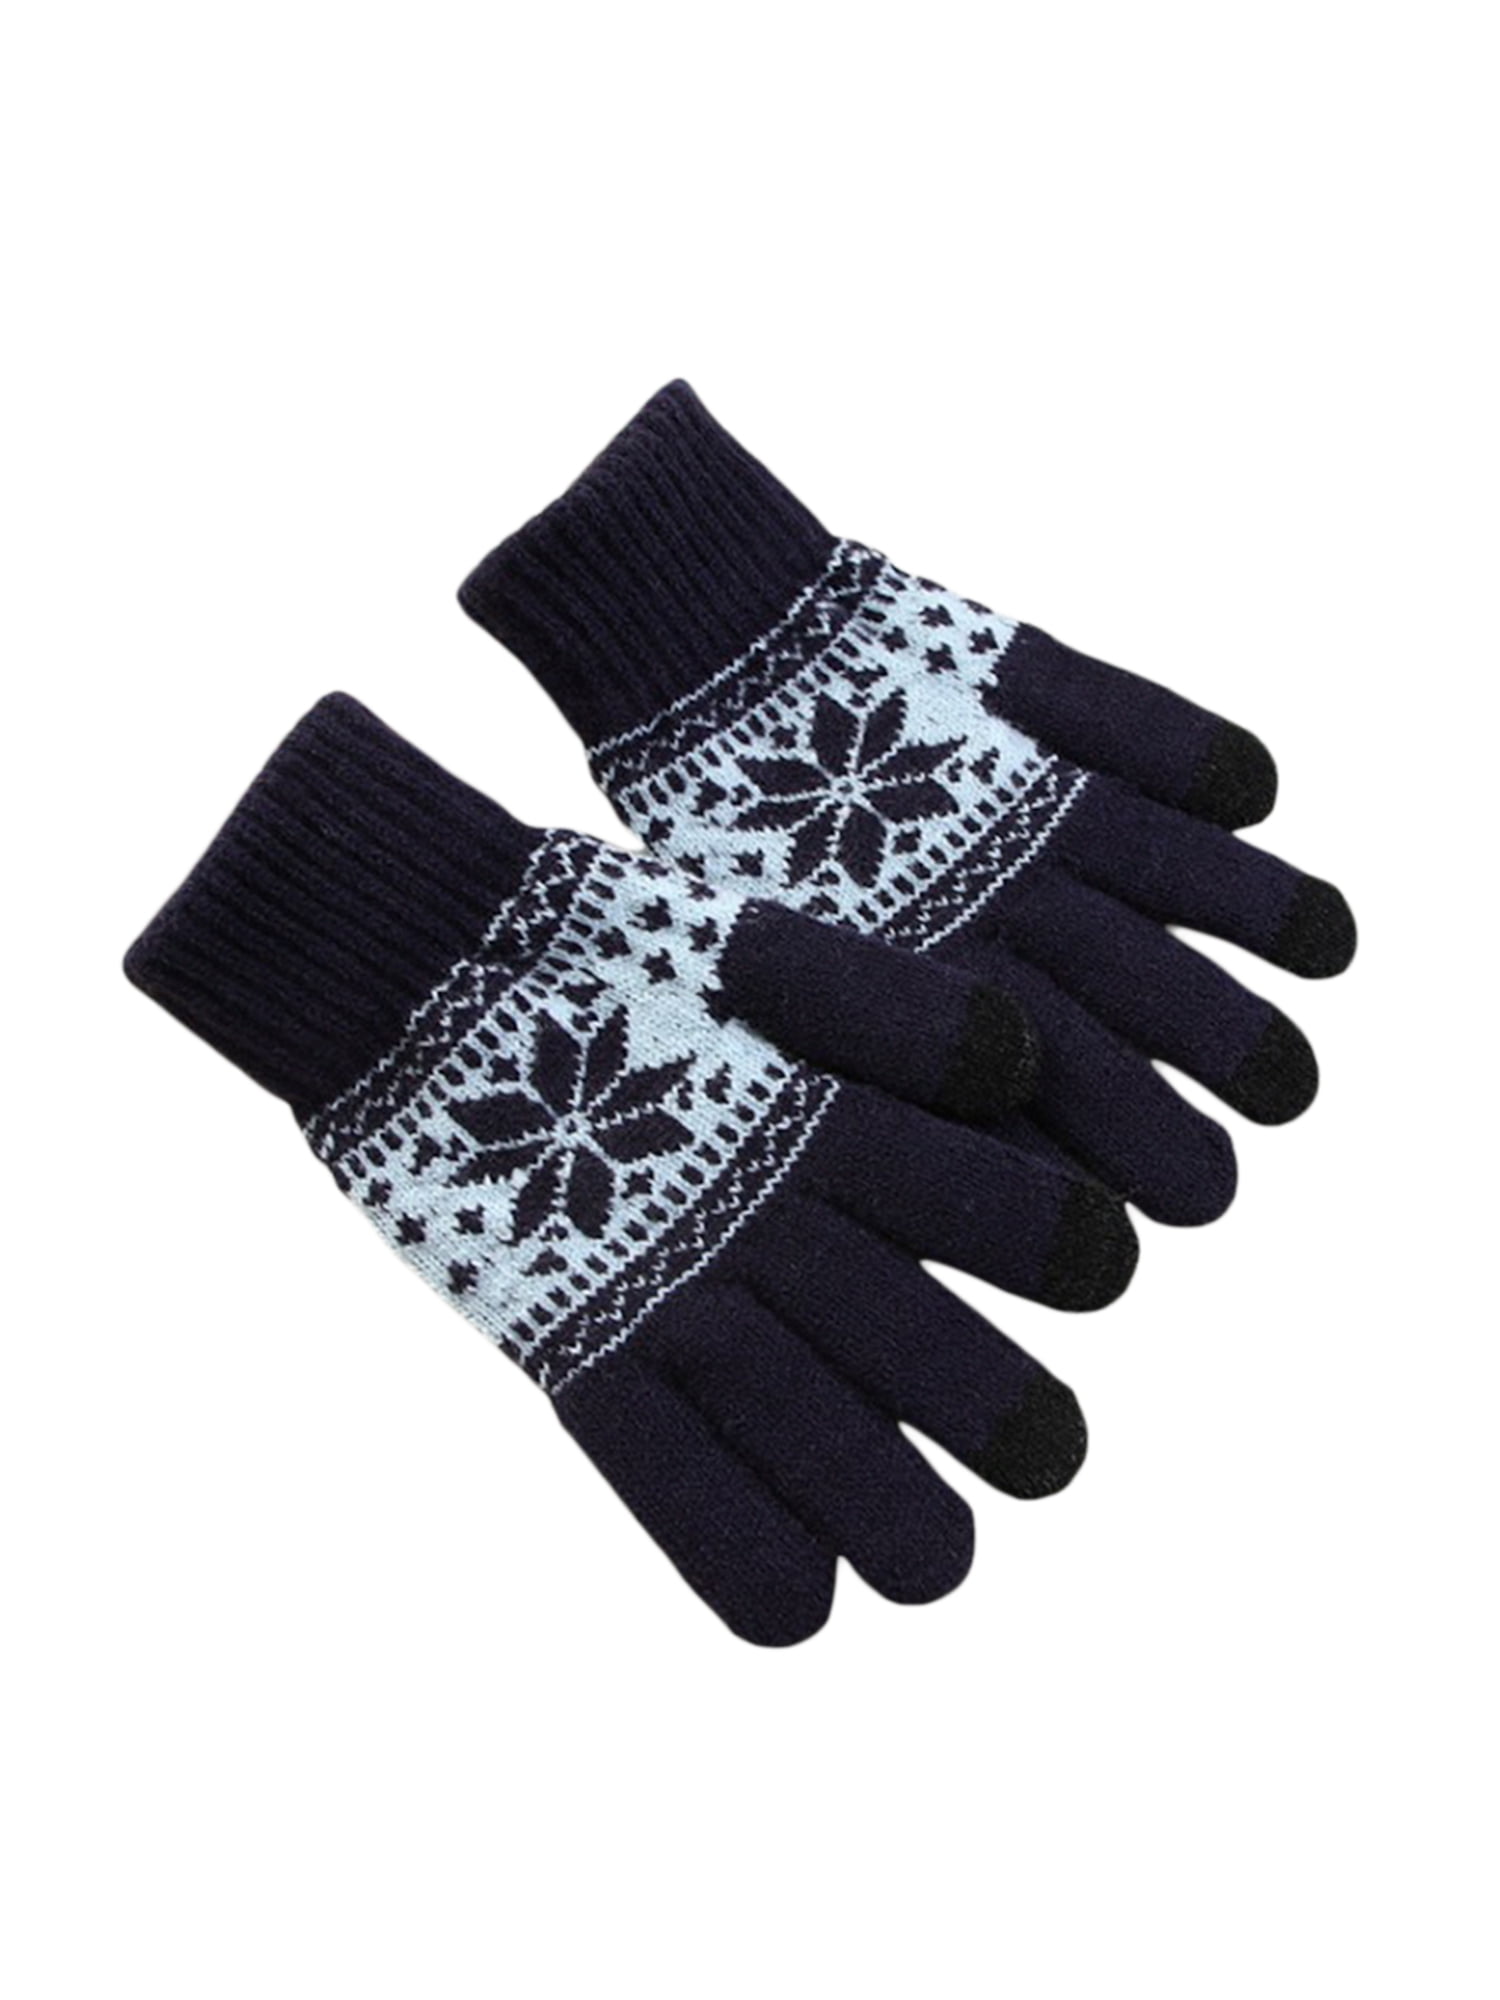 Winter Warm Full Finger Screen Gloves Smartphone Testing Knit Magic Mitten 